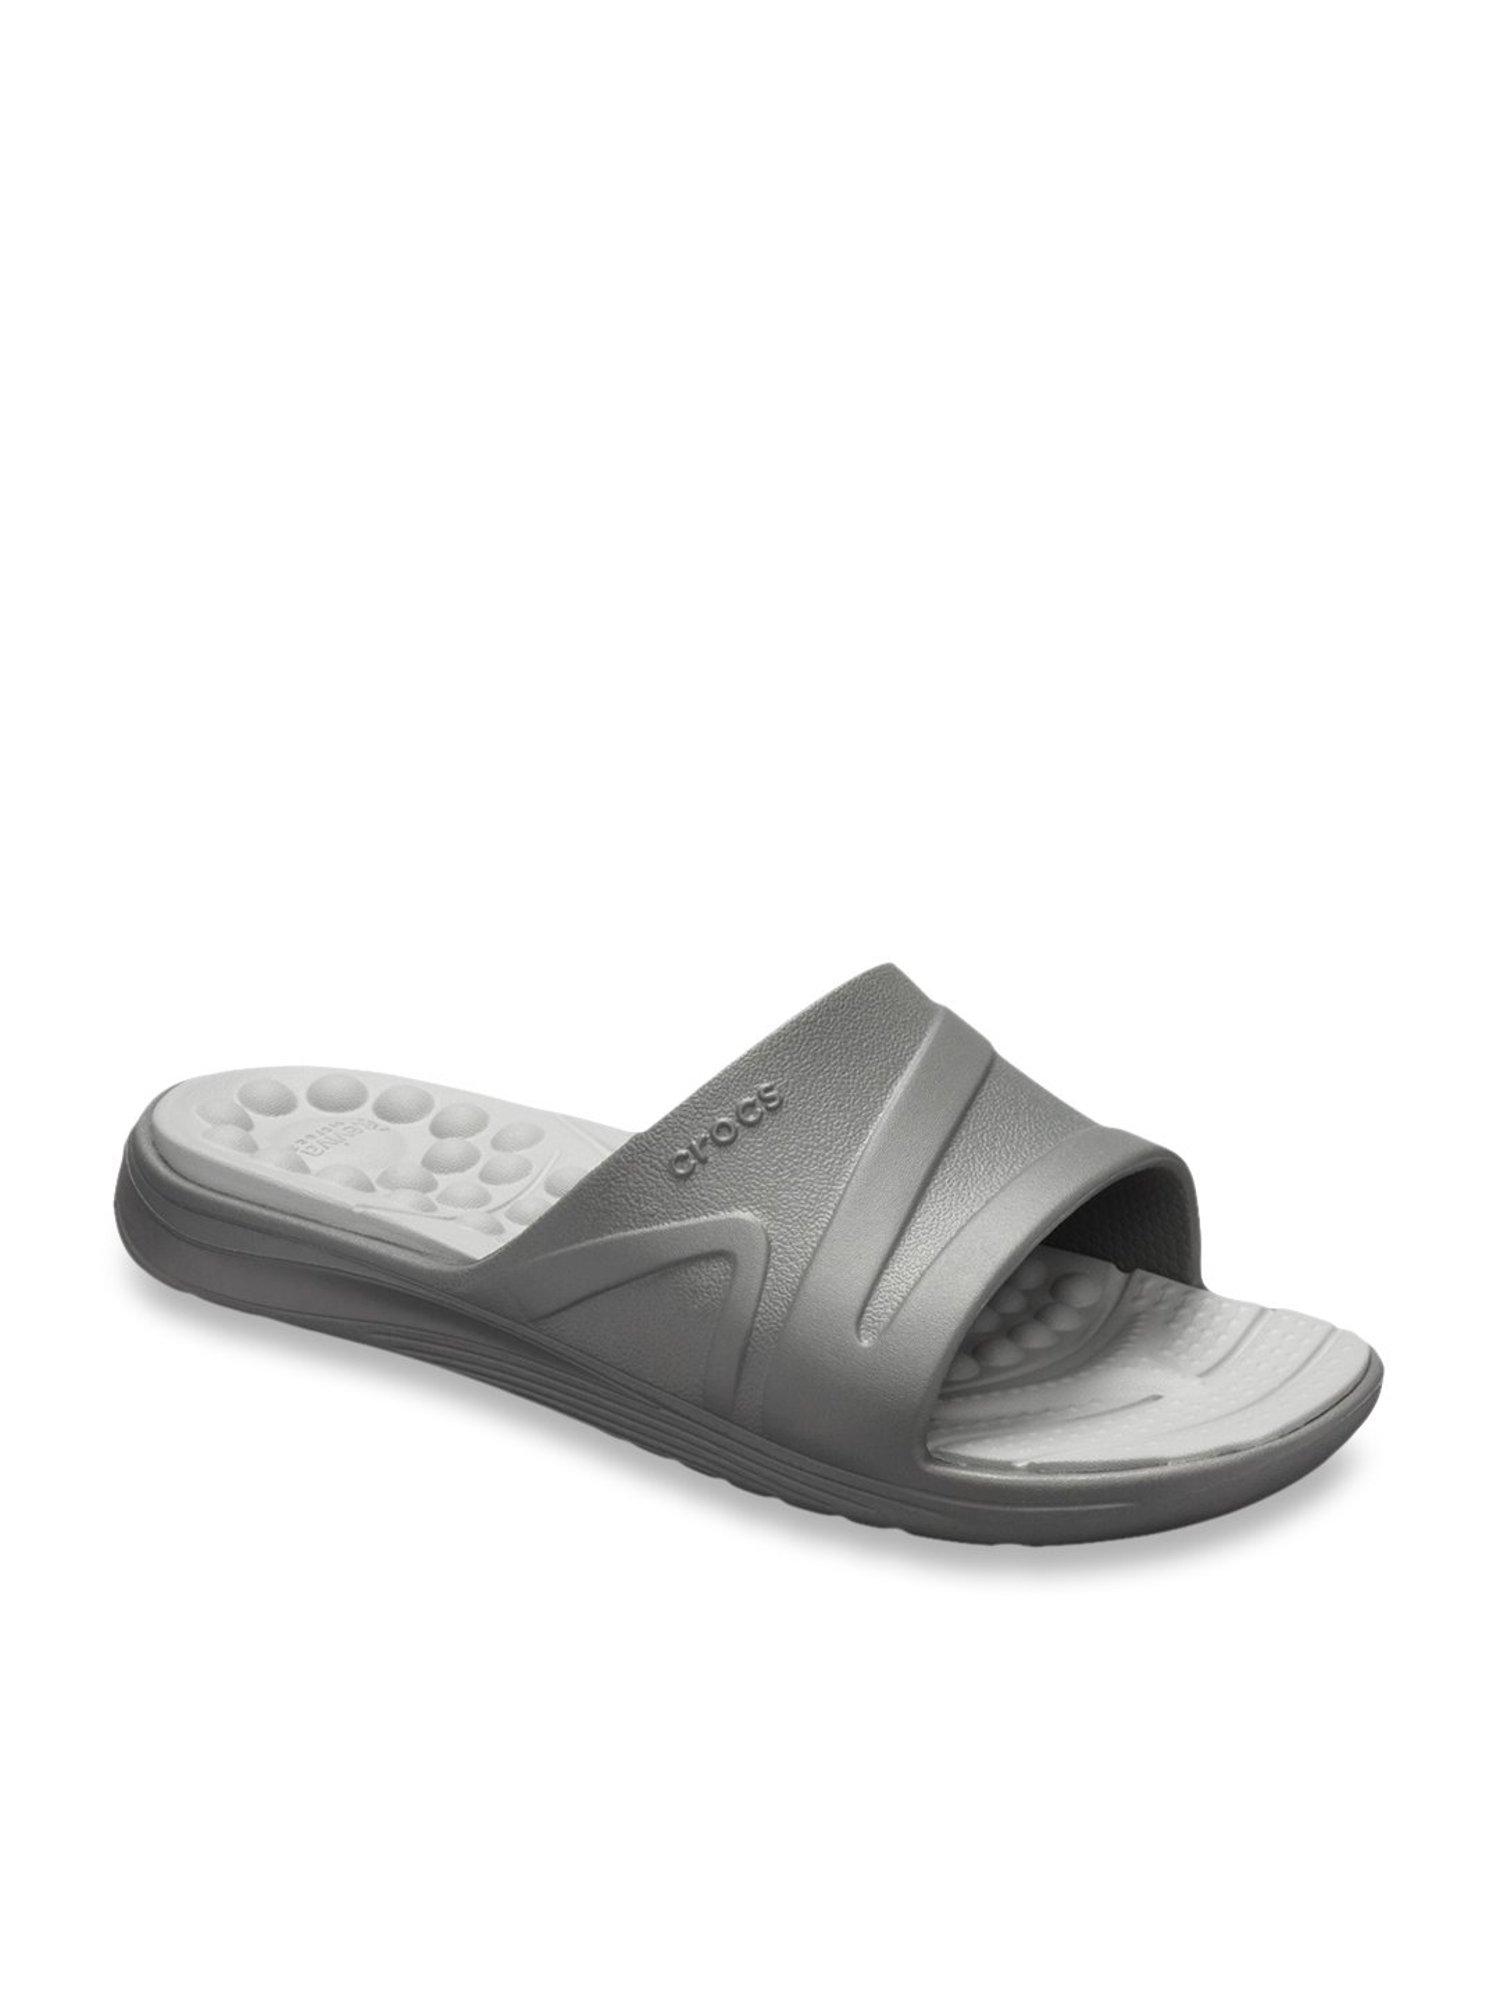 Crocs Reviva Slate Grey Casual Sandals 